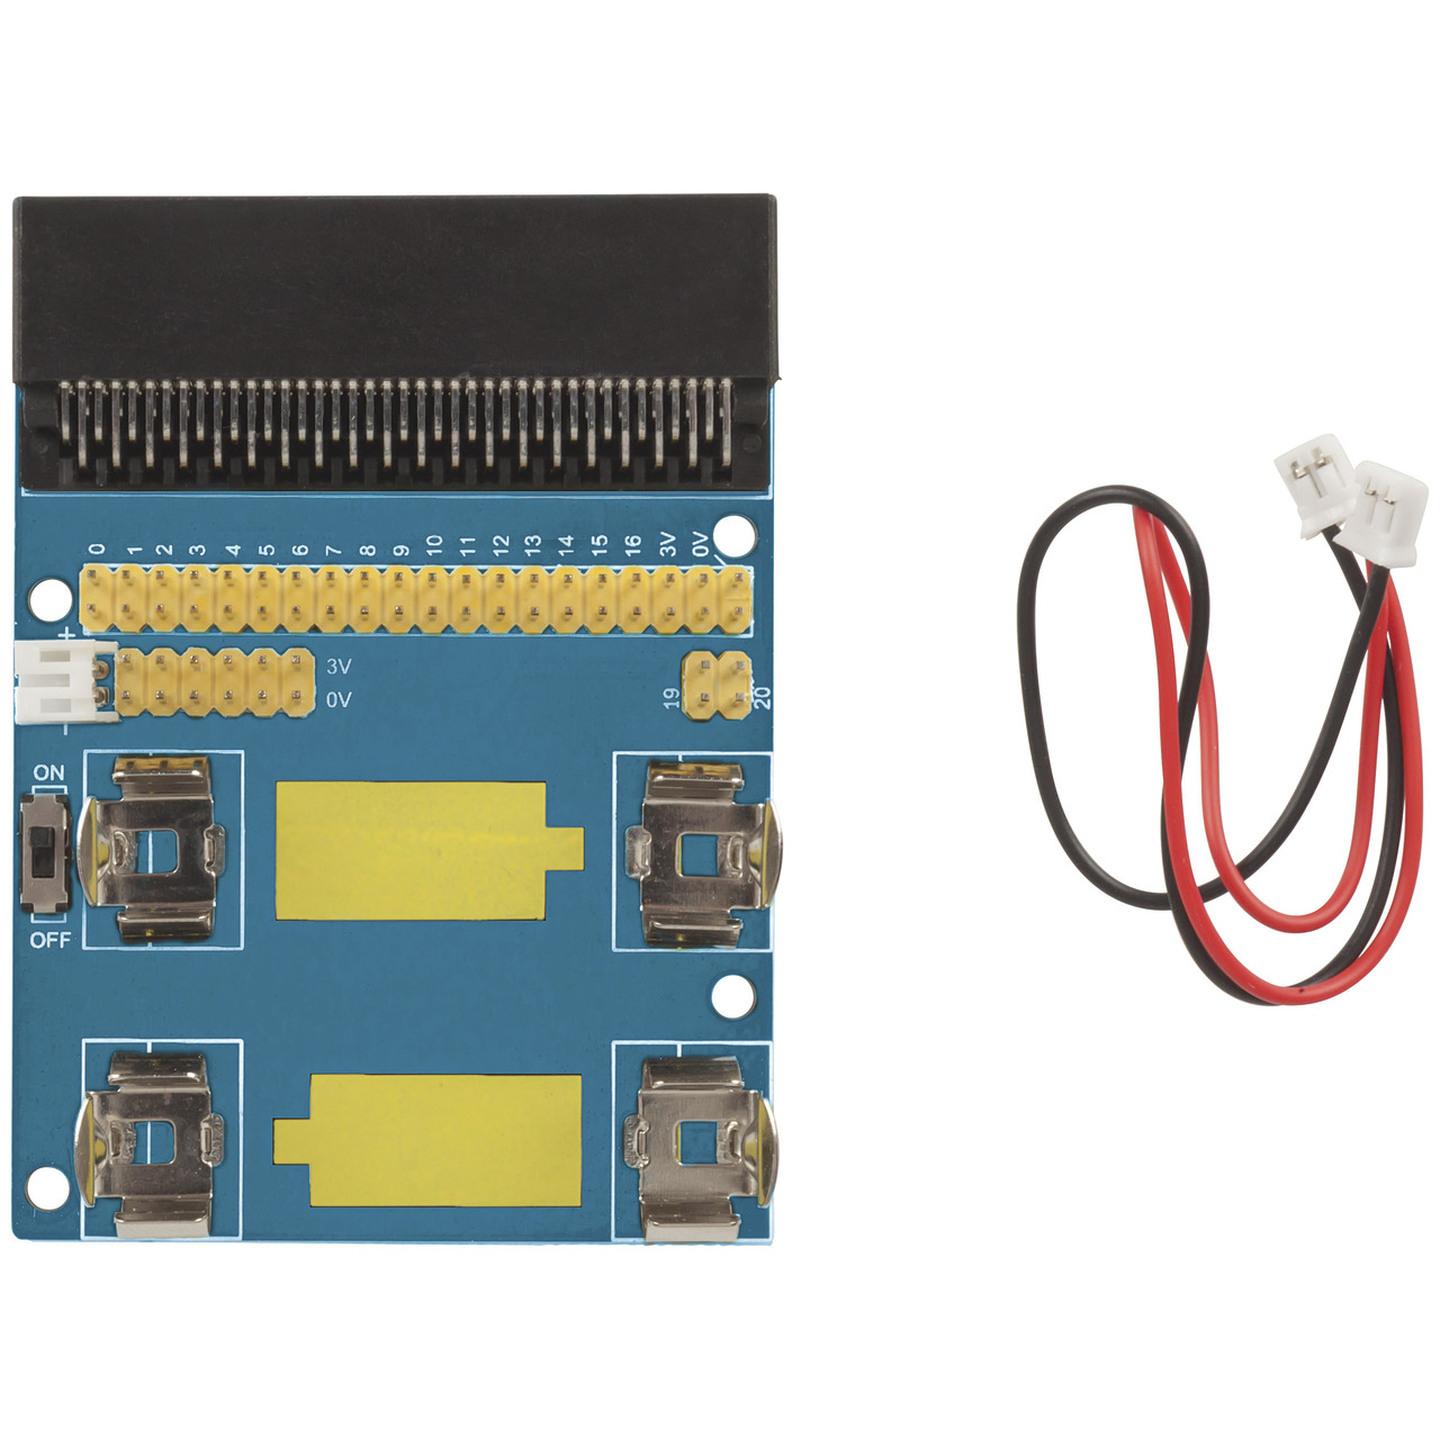 Duinotech BBC micro:bit Breakout Board with 2 x AA Battery Holder